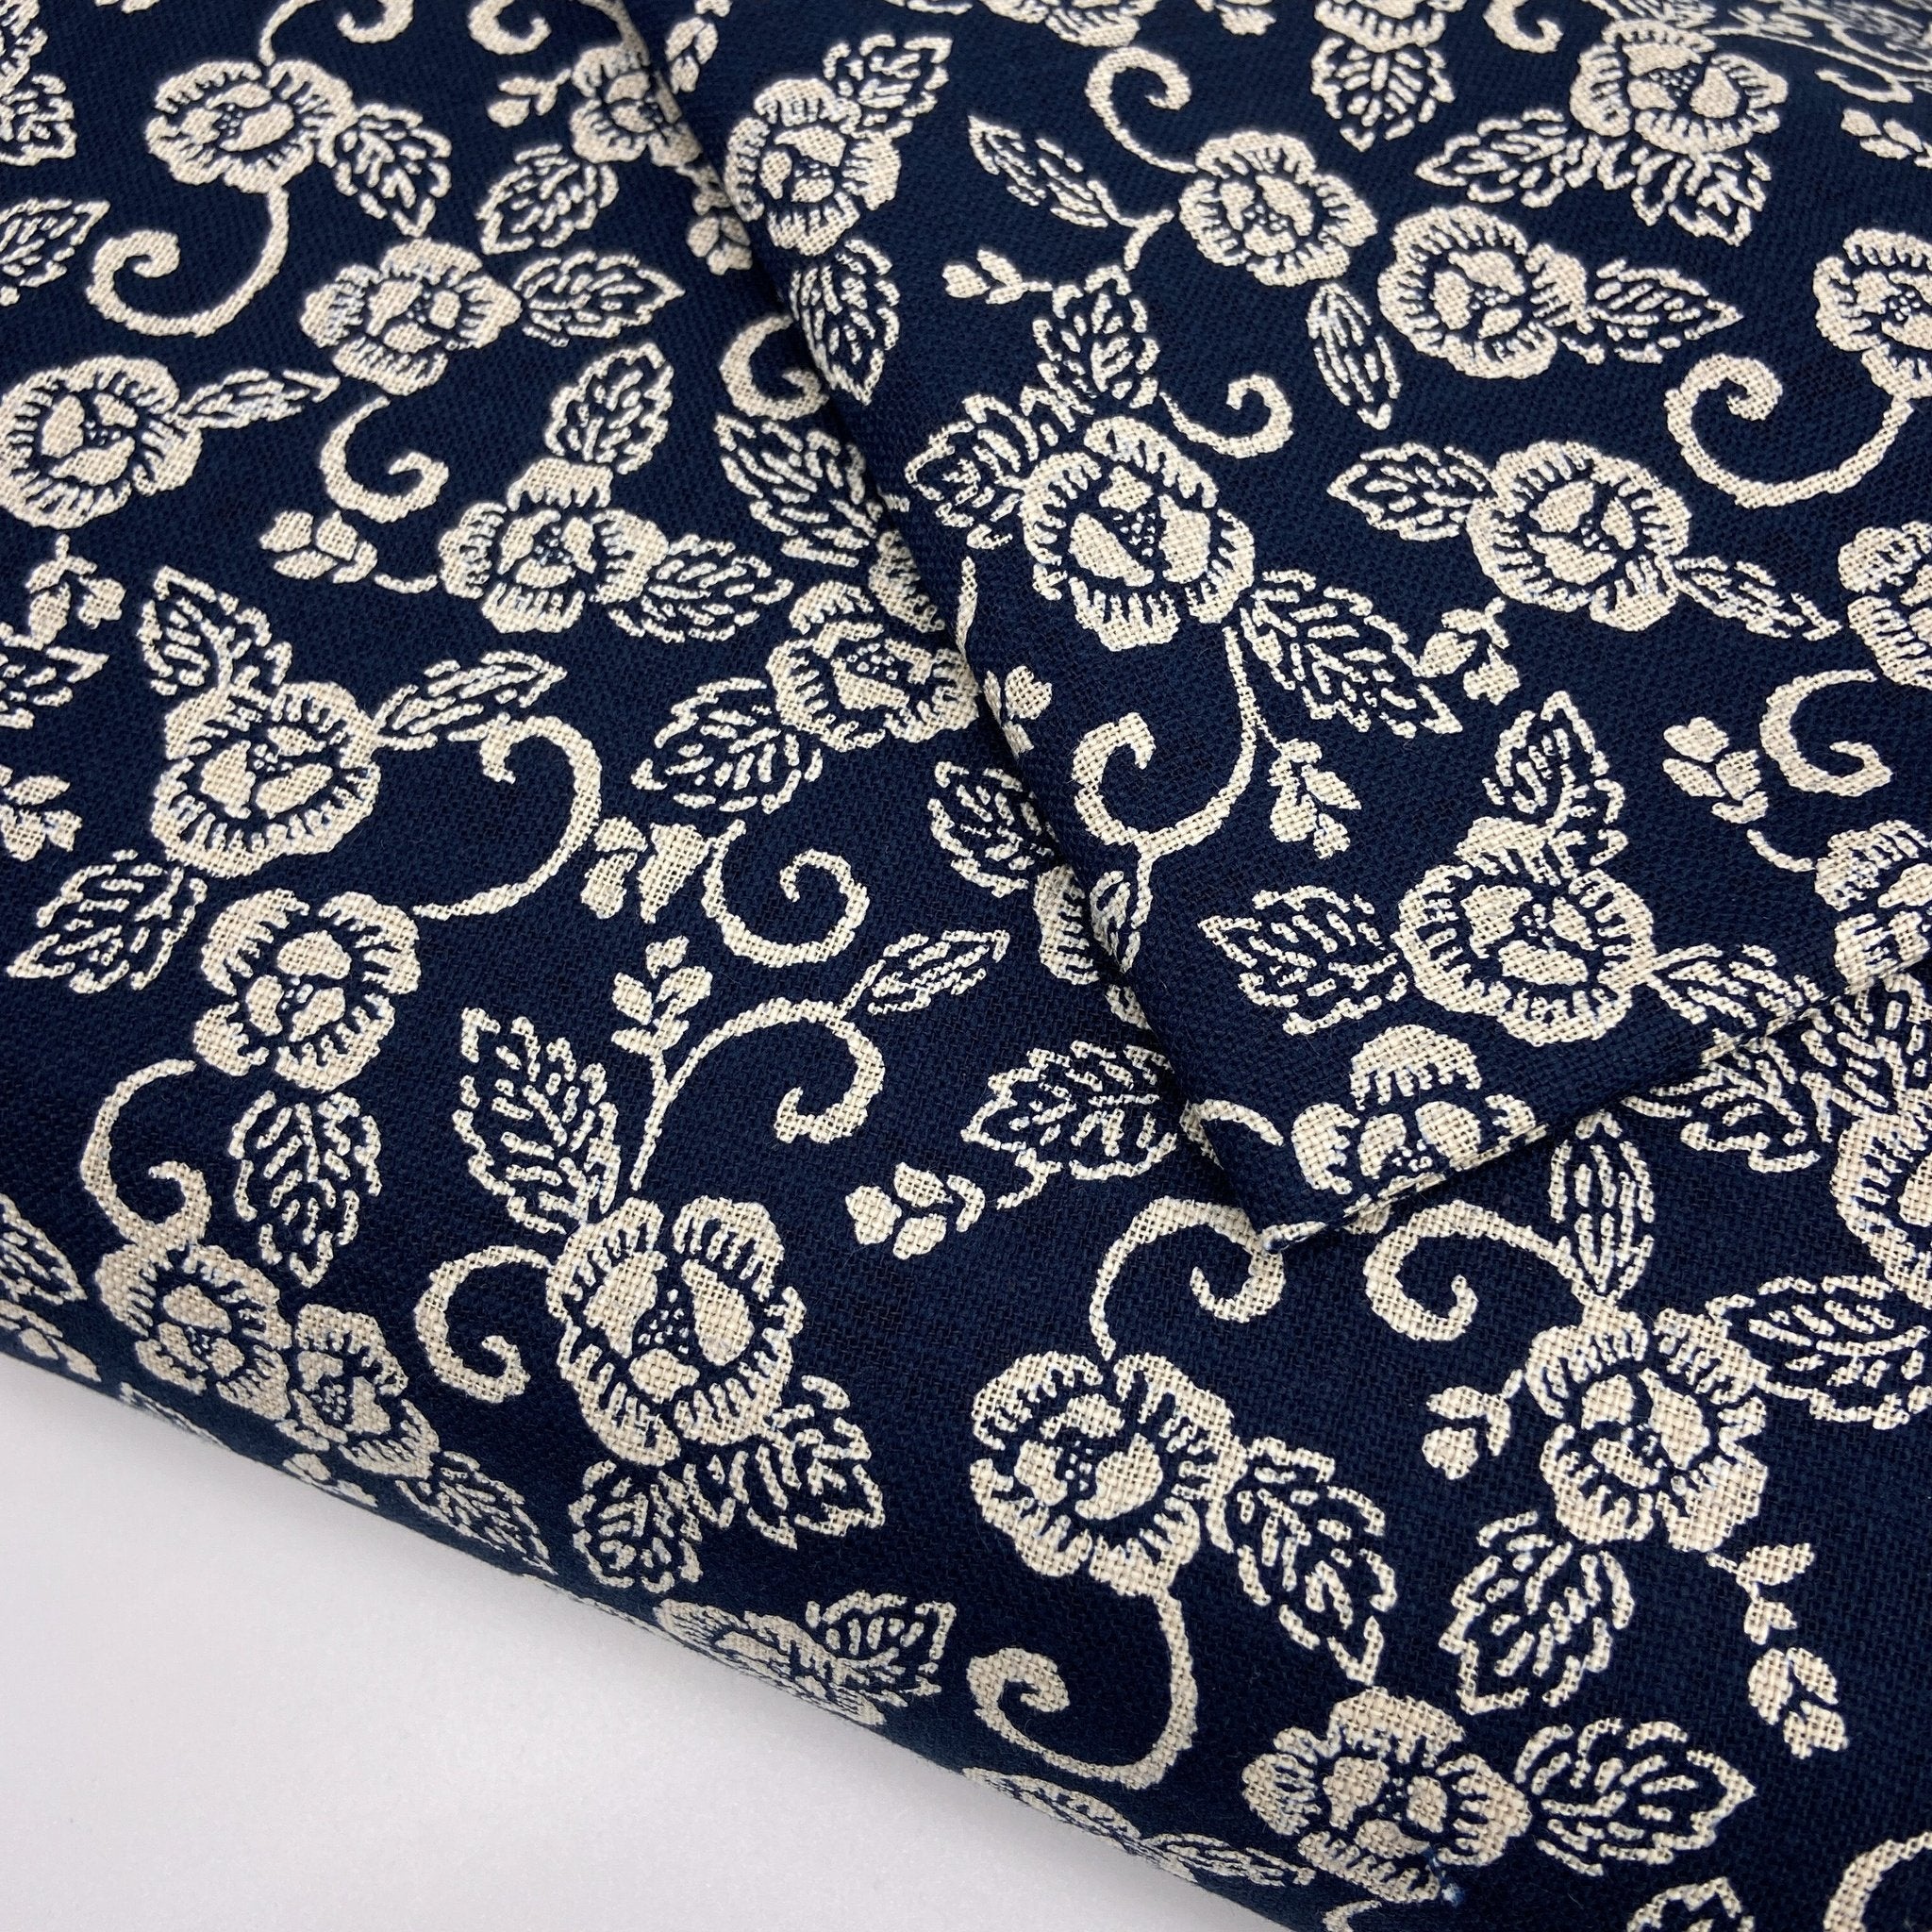 Japanese Cotton Uneven Yarns Sheeting Print - Indigo Peony